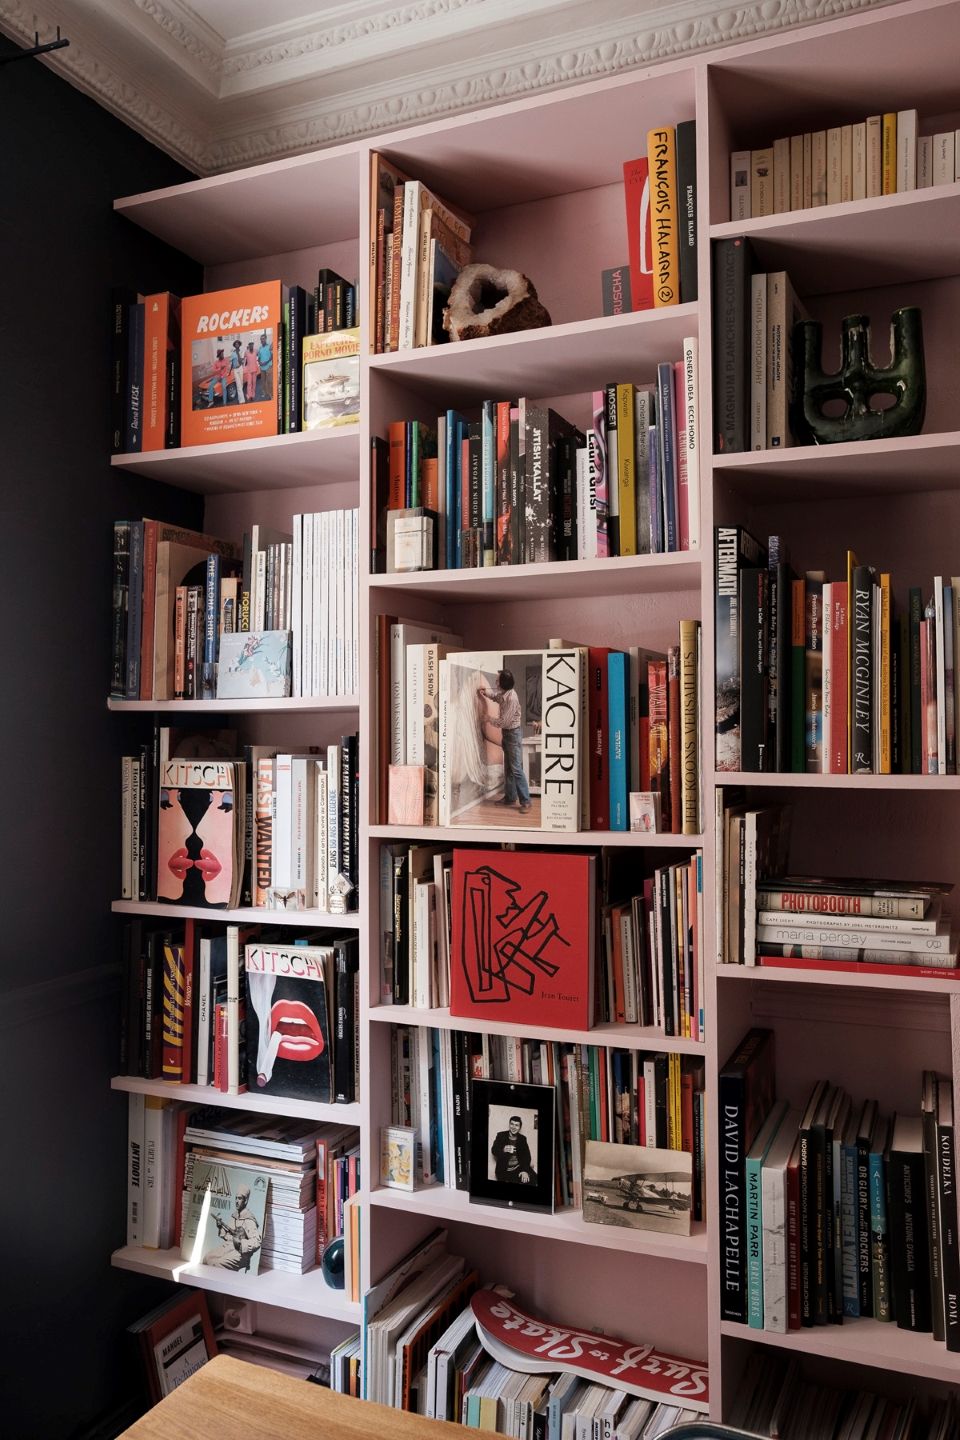 books on shelves in a room